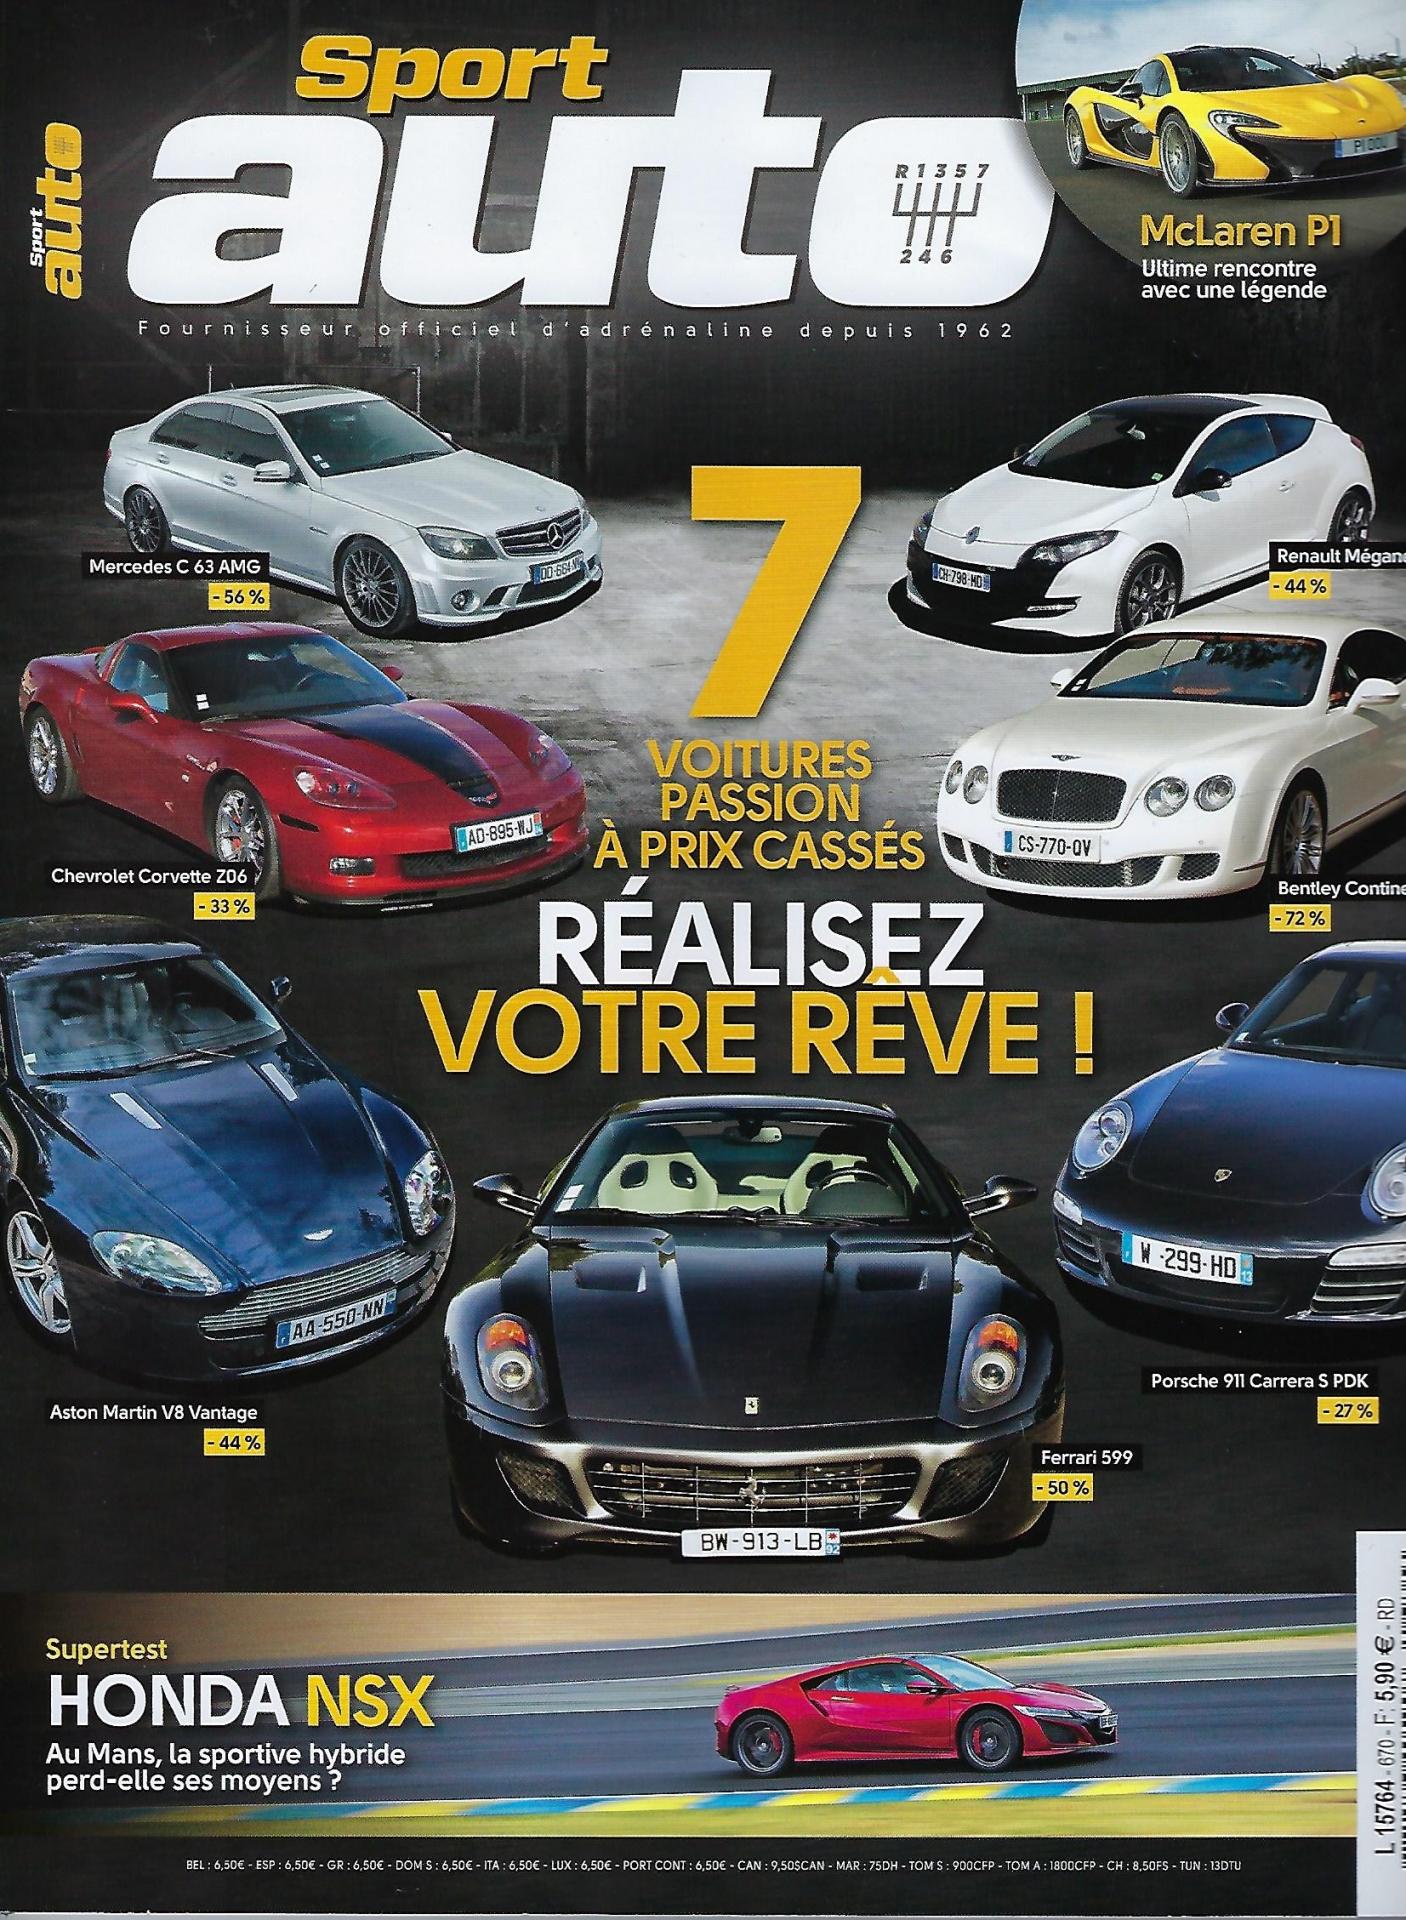 Sport auto reportage drivecar page 1 jpeg